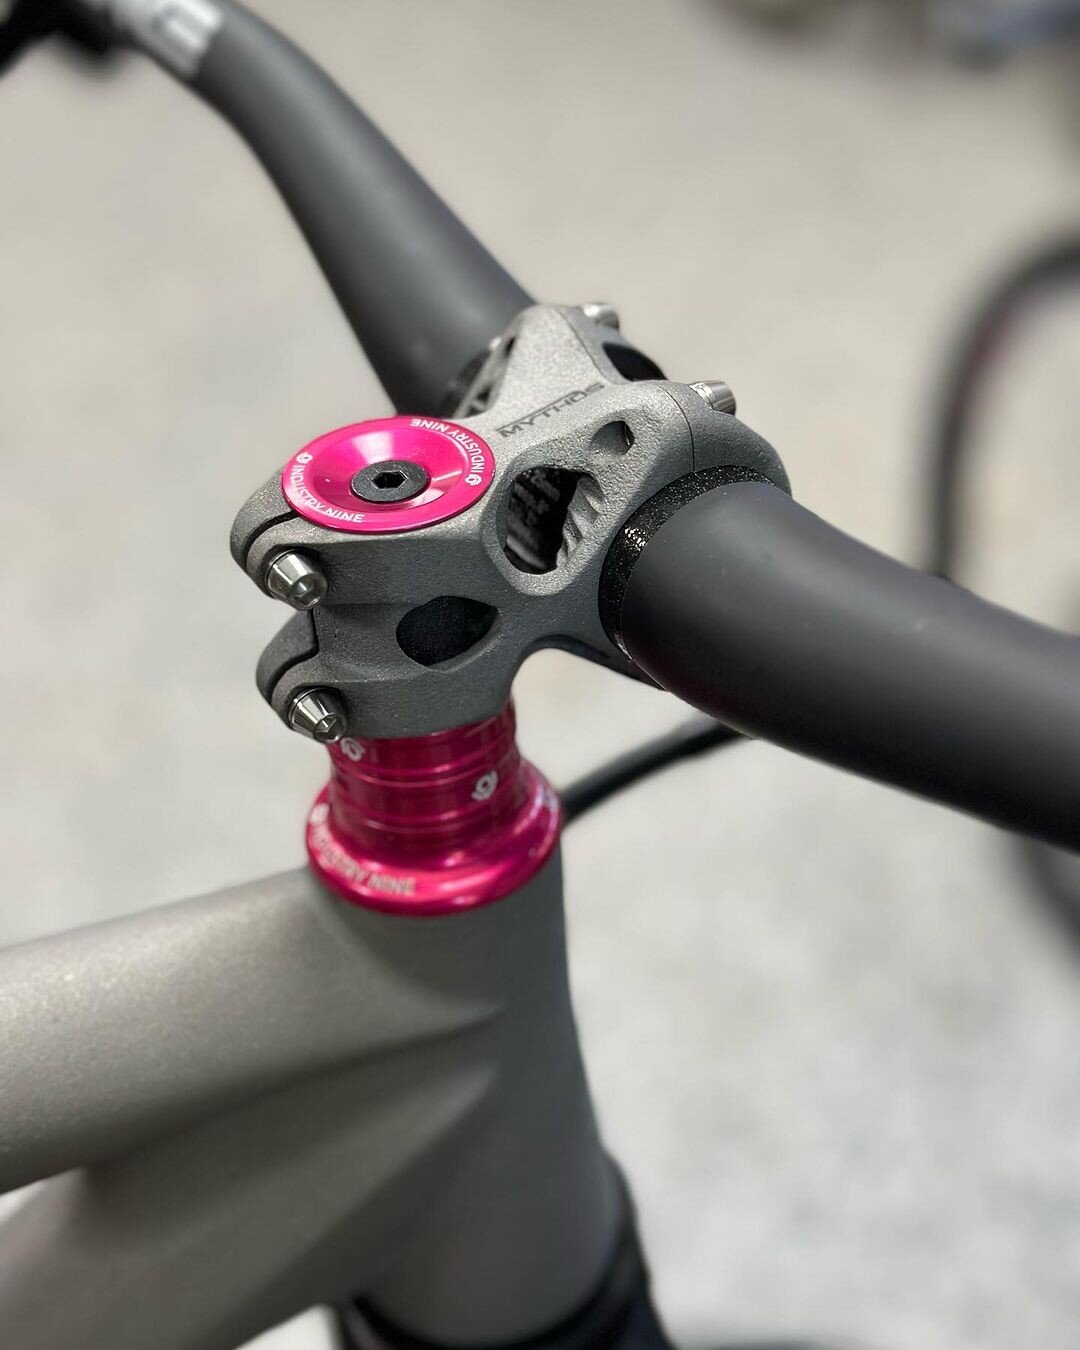 The beautiful @viral_bikes Optimist running a 40mm Ixo stem. 3D printed titanium everywhere!

#MYTHOS #IXO #mtb #pinkbike #titanium #titaniumbike #bike #3dprinting